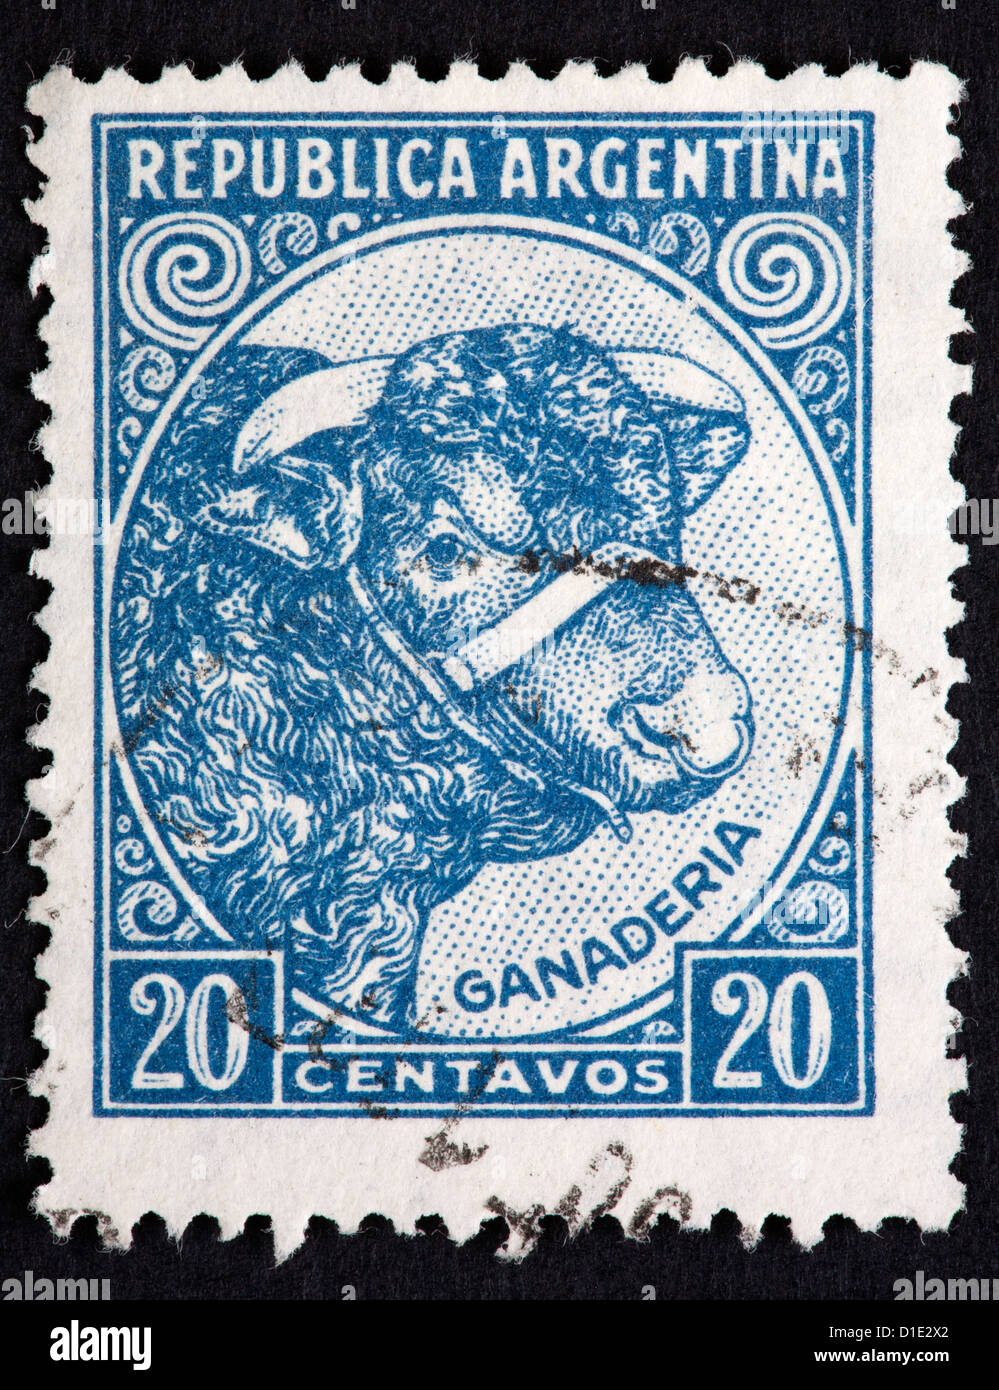 Argentine postage stamp Stock Photo